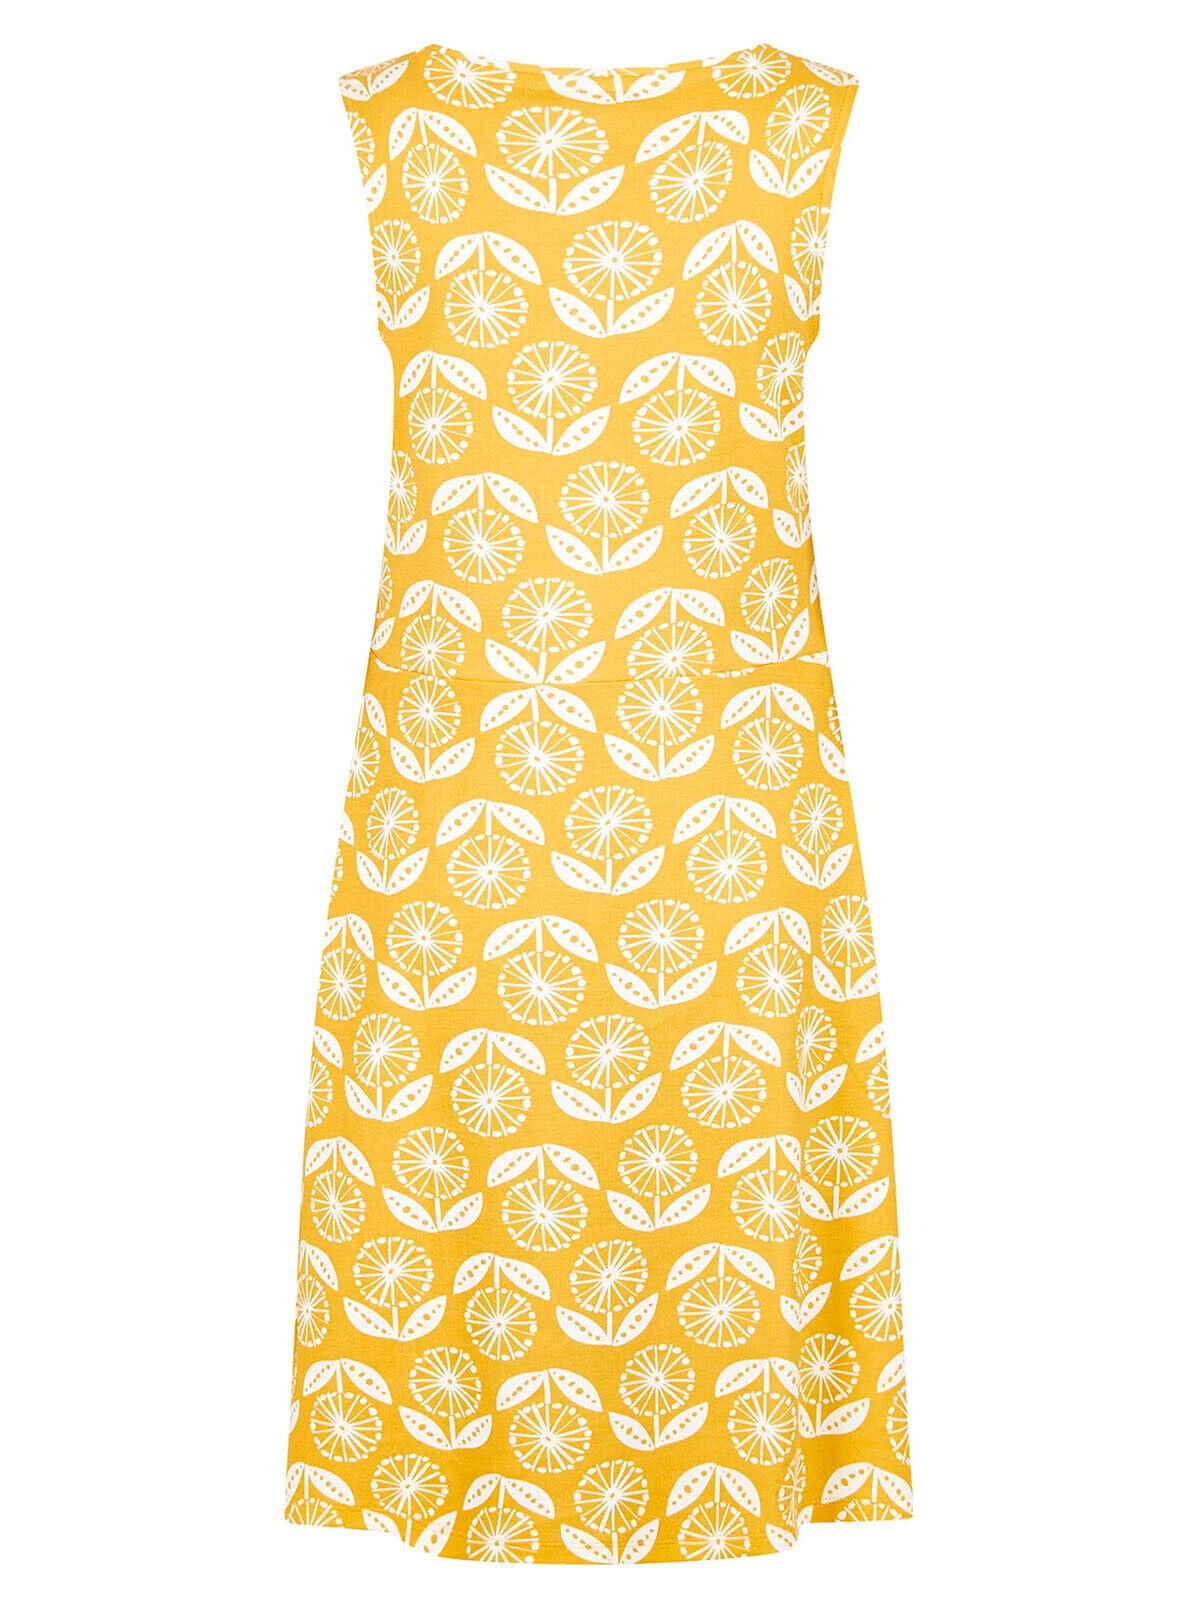 Weird Fish Sunshine Yellow Paisley Printed Jersey Dress 8 10 12 14 16 20 RRP £35